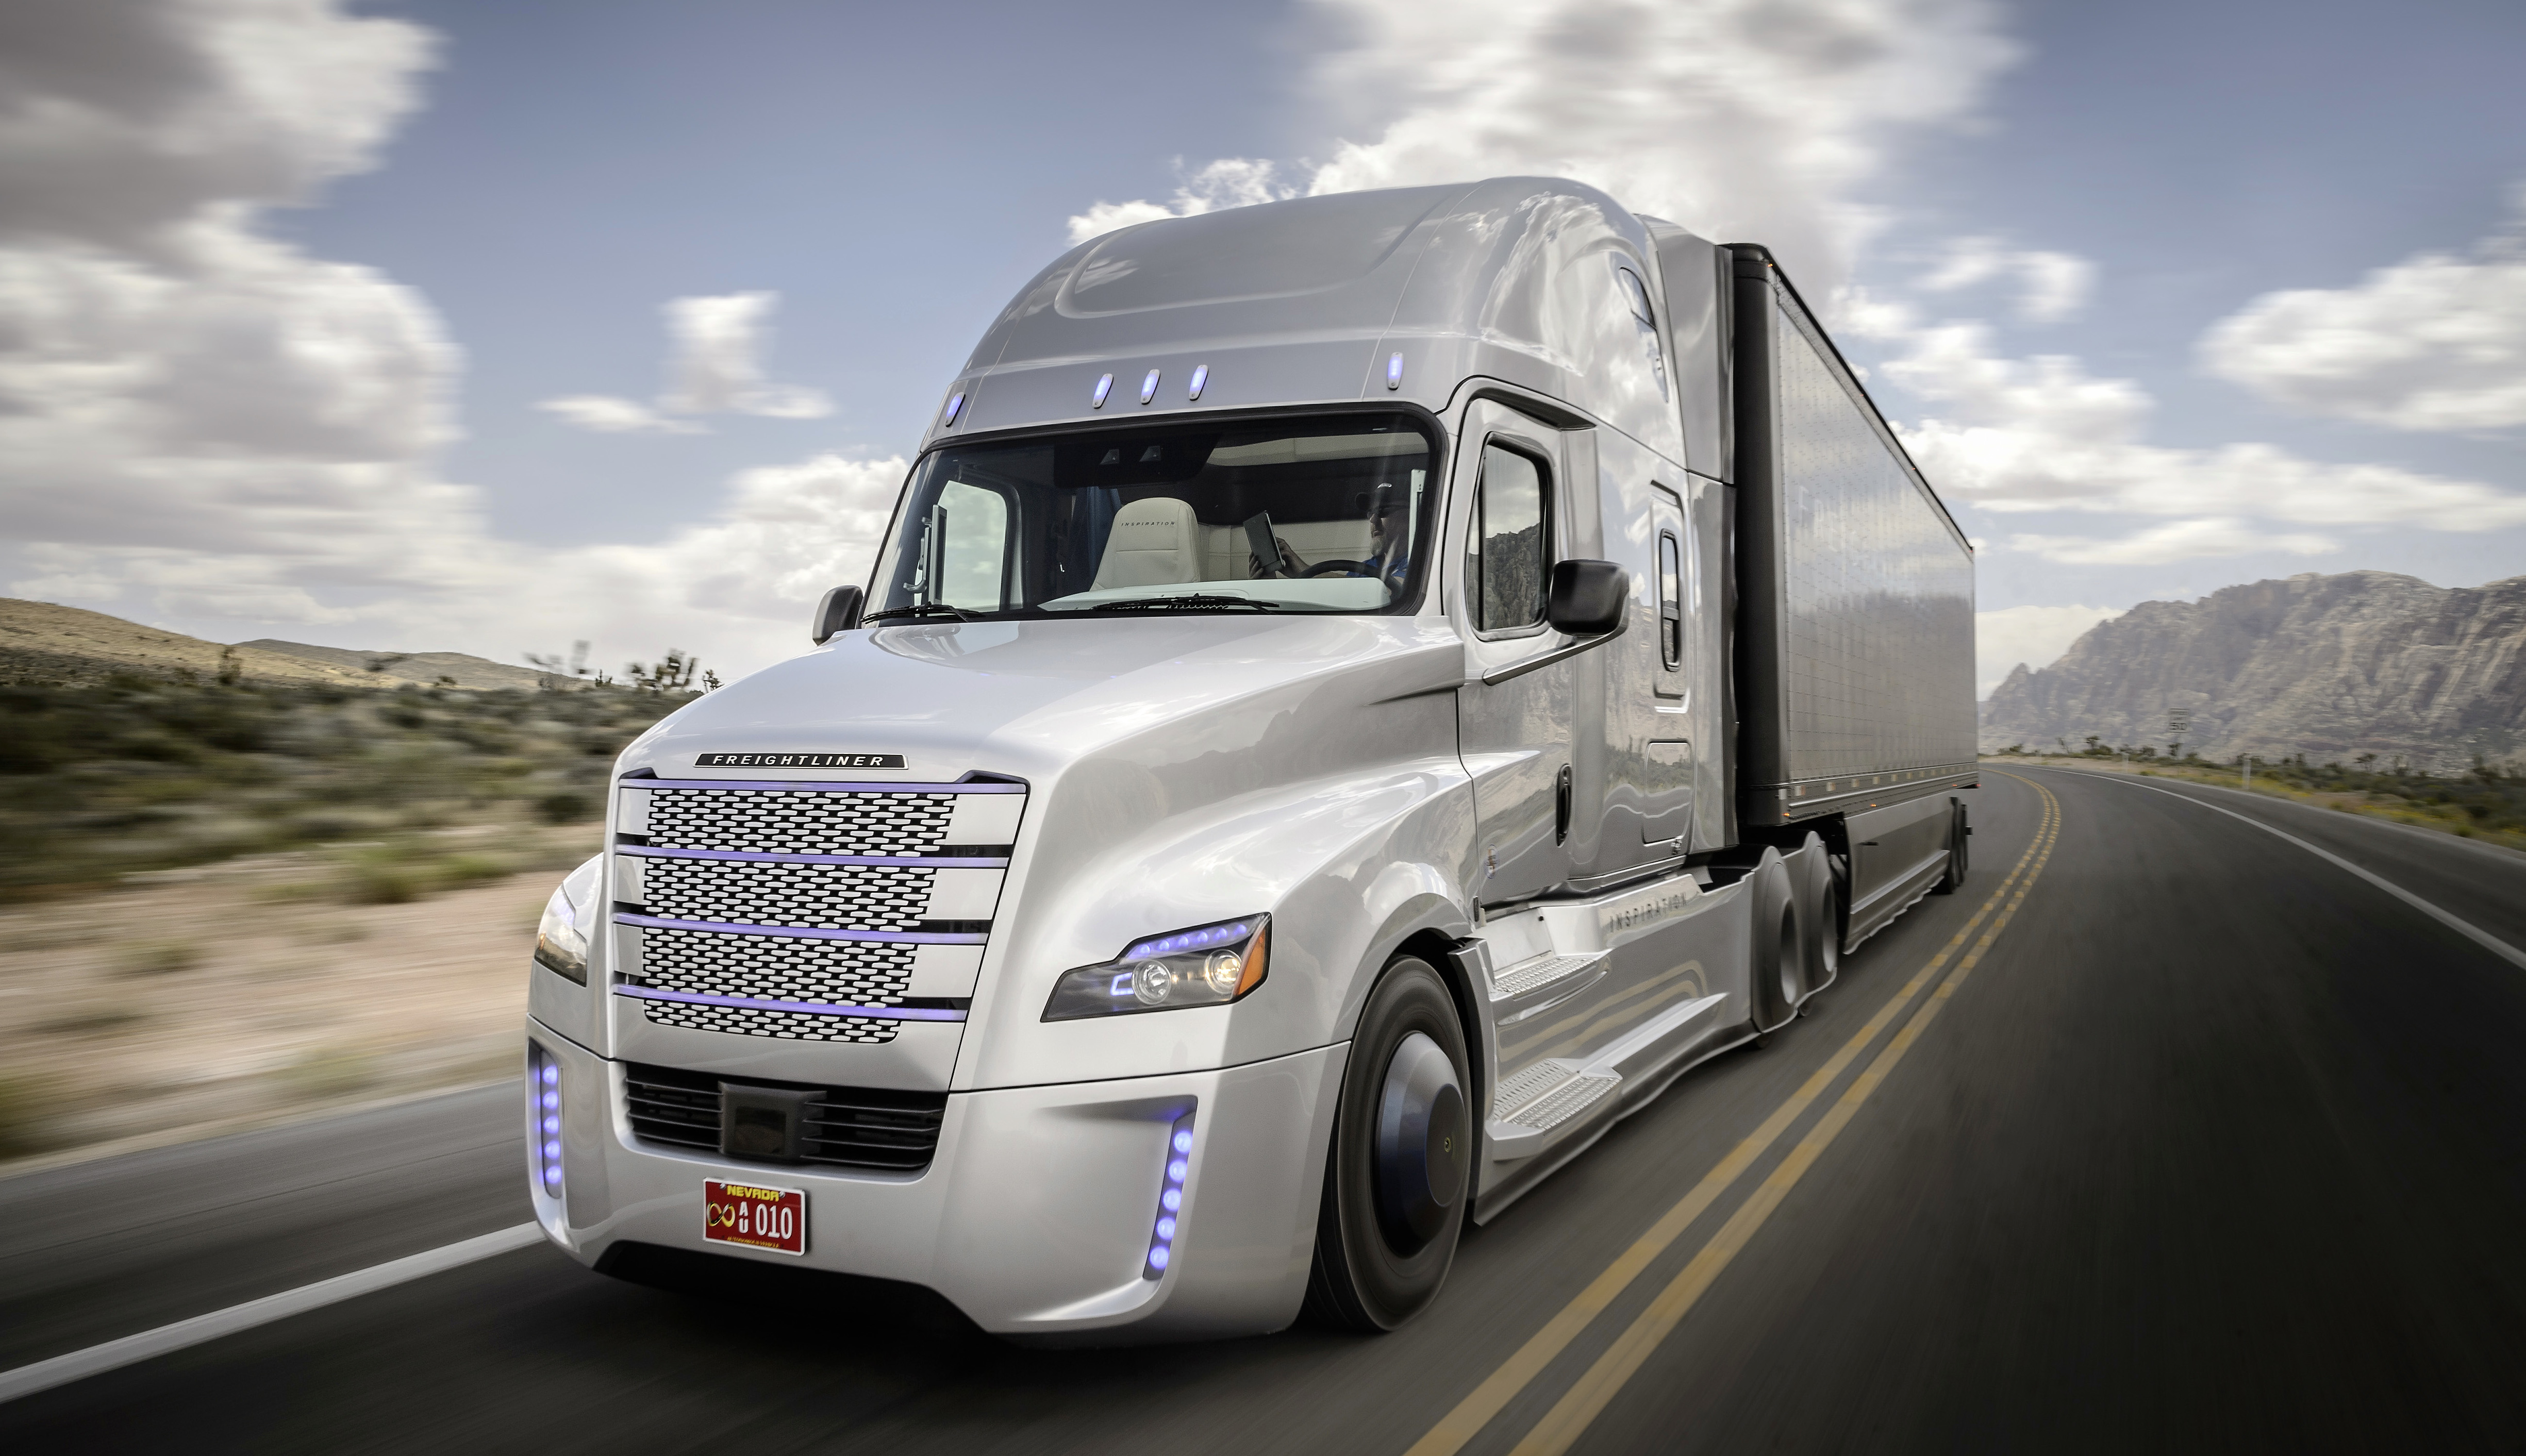 SelfDriving Semi Trucks Hit The Highway For Testing In Nevada